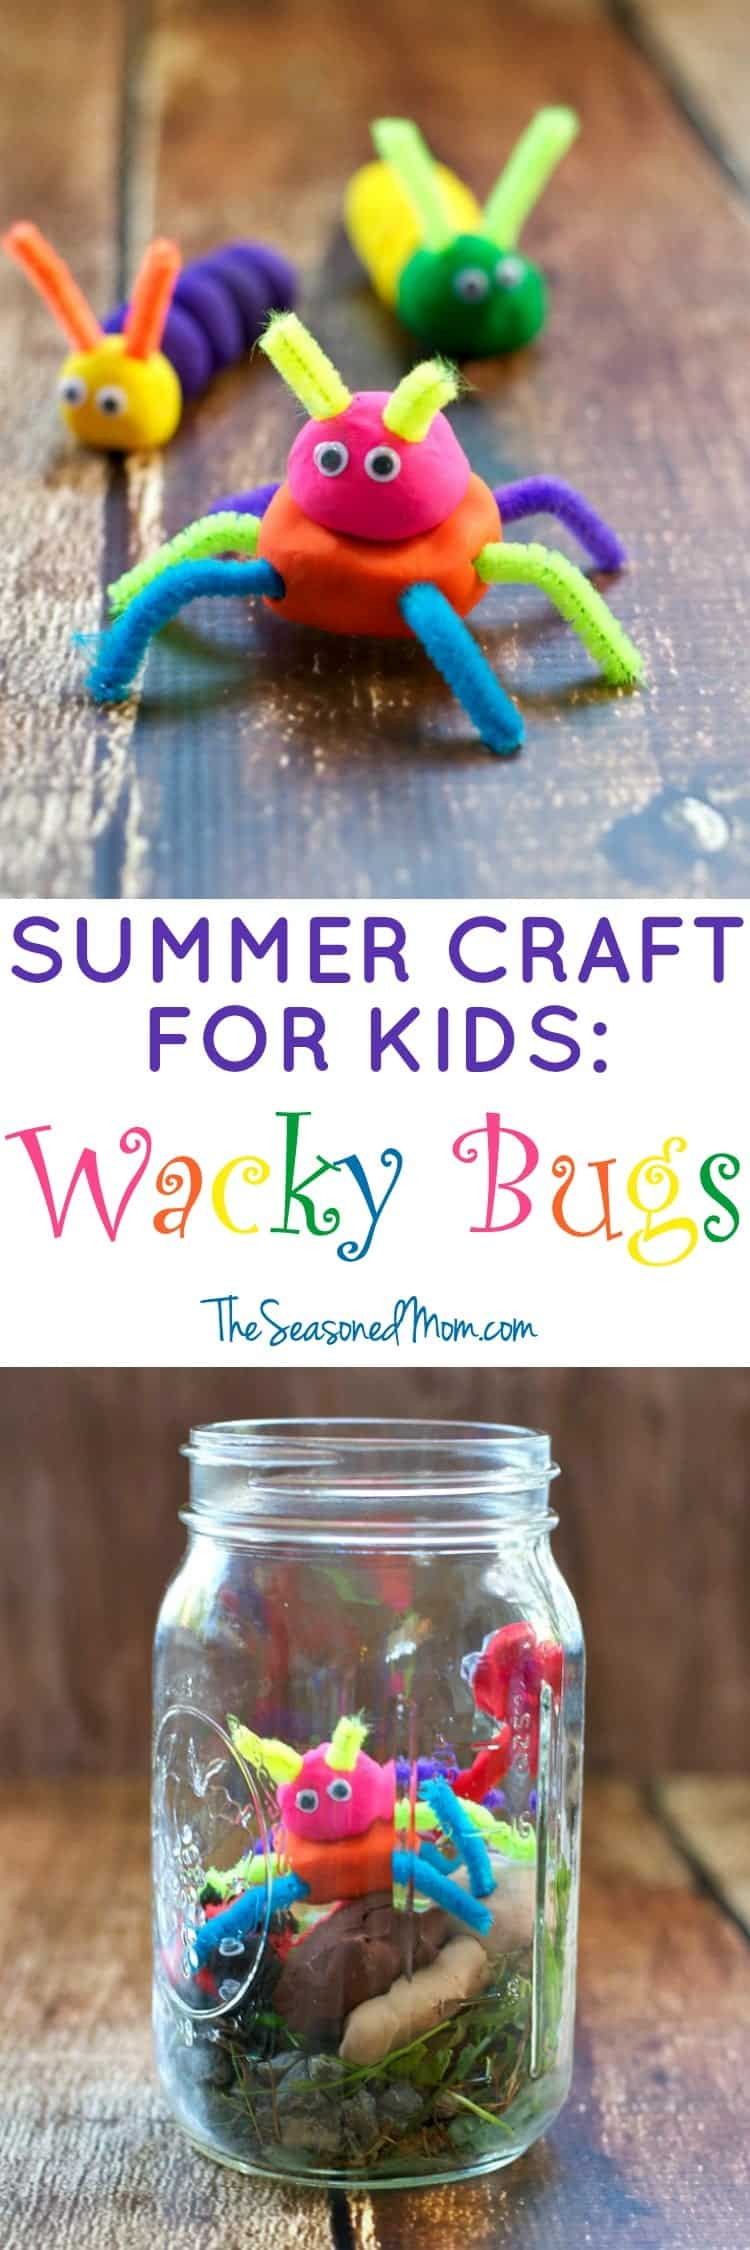 Bug Craft For Kids
 Summer Craft for Kids Wacky Bugs The Seasoned Mom